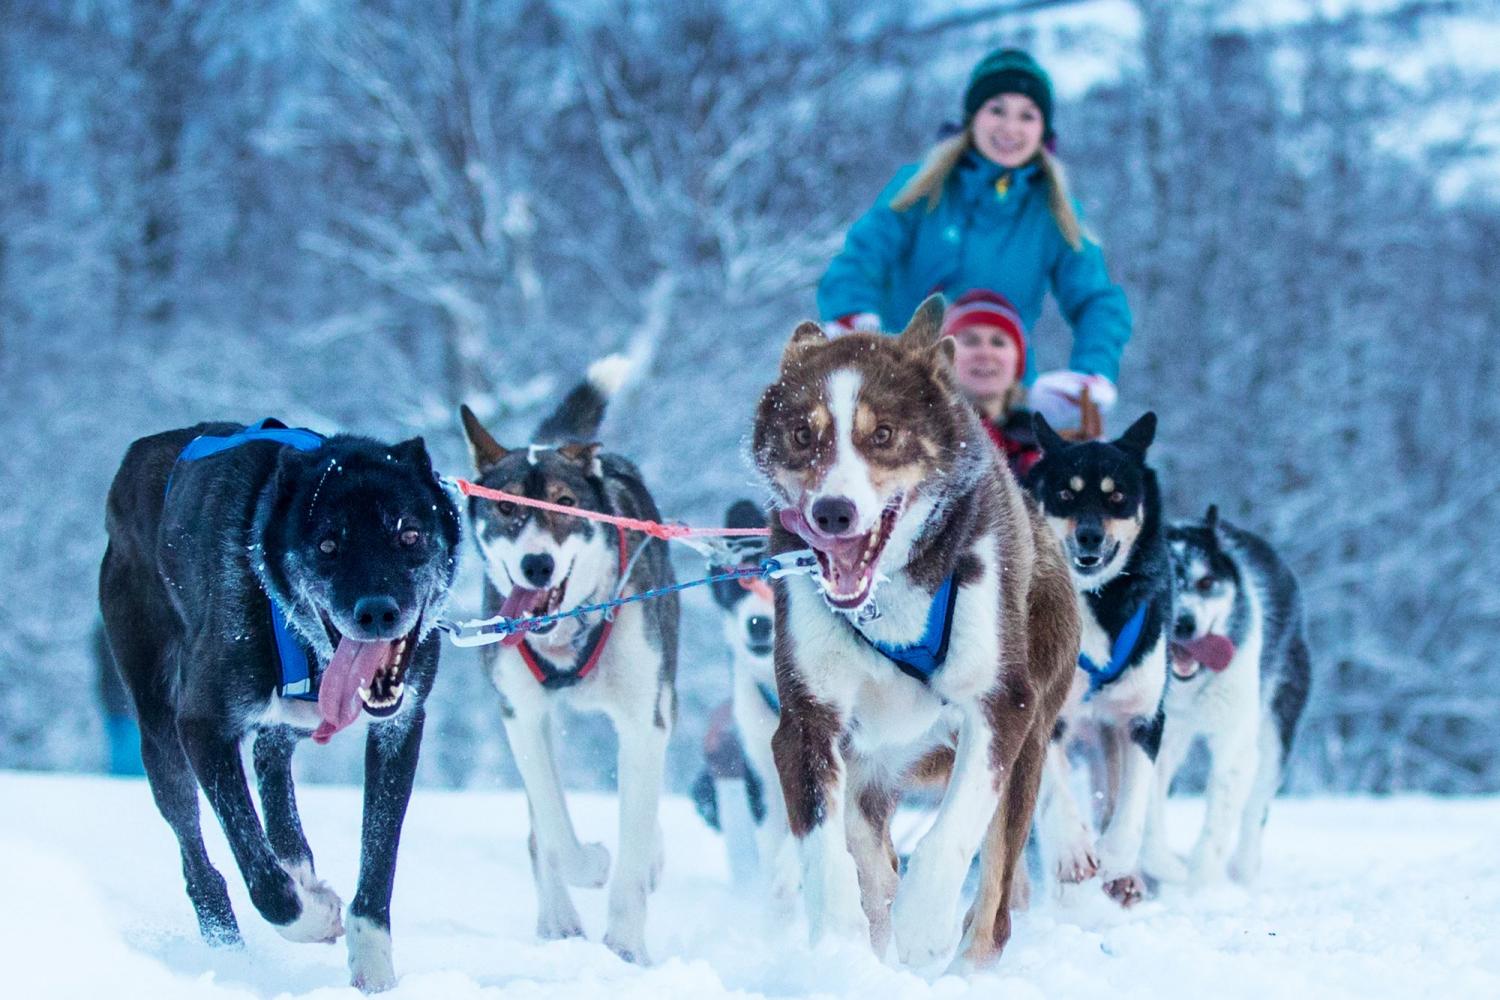 Dog-sledding with Northern Lights Ceremony